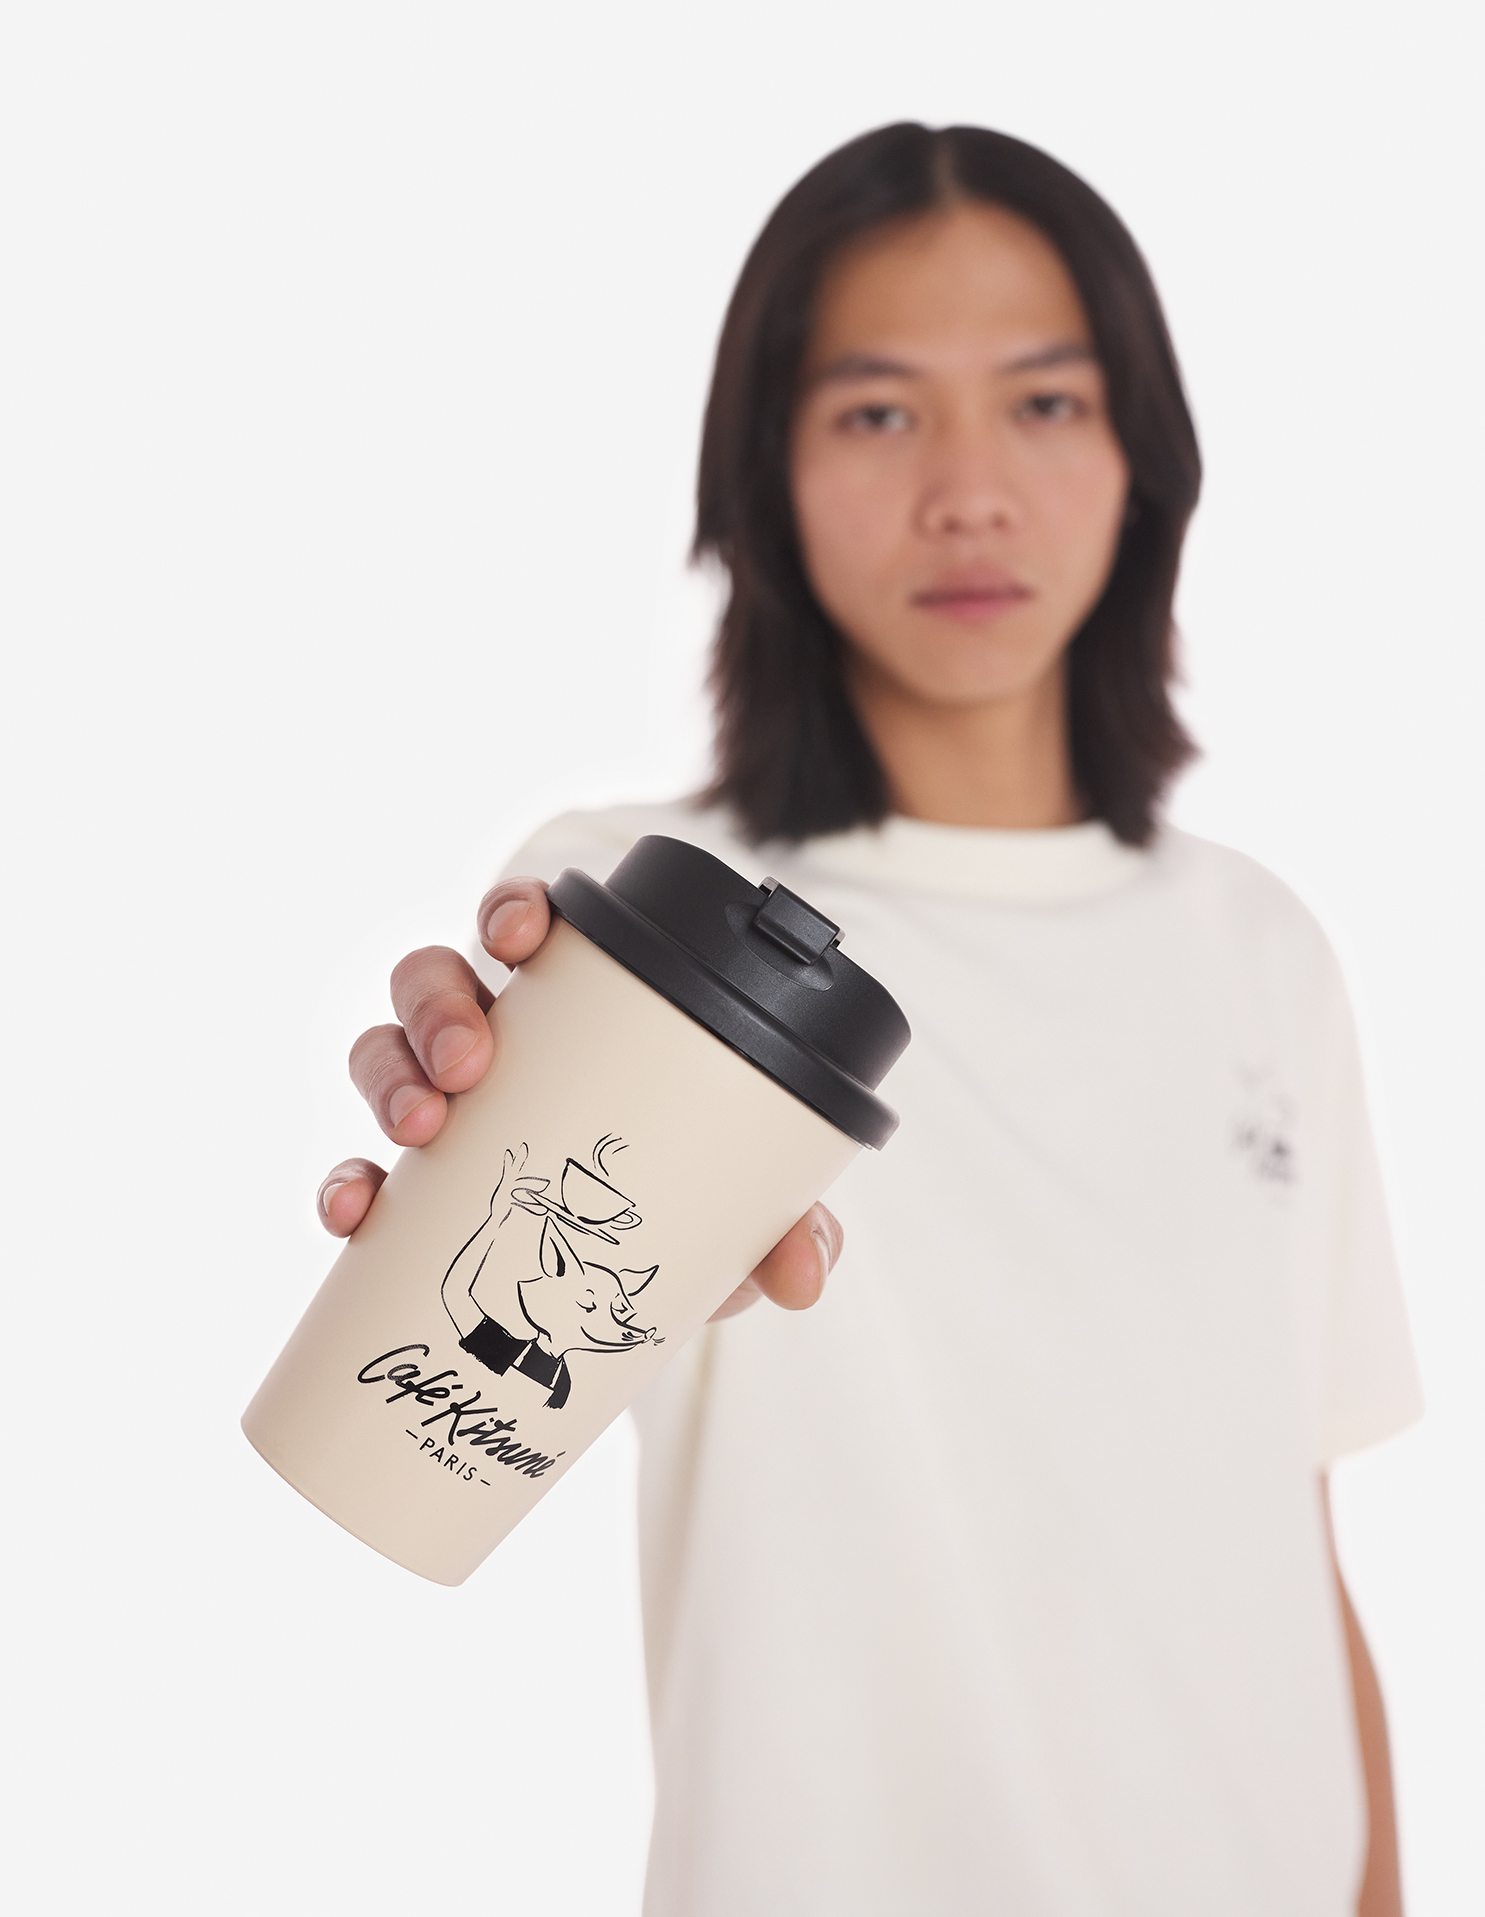 CAFE KITSUNE CUP TUMBLR